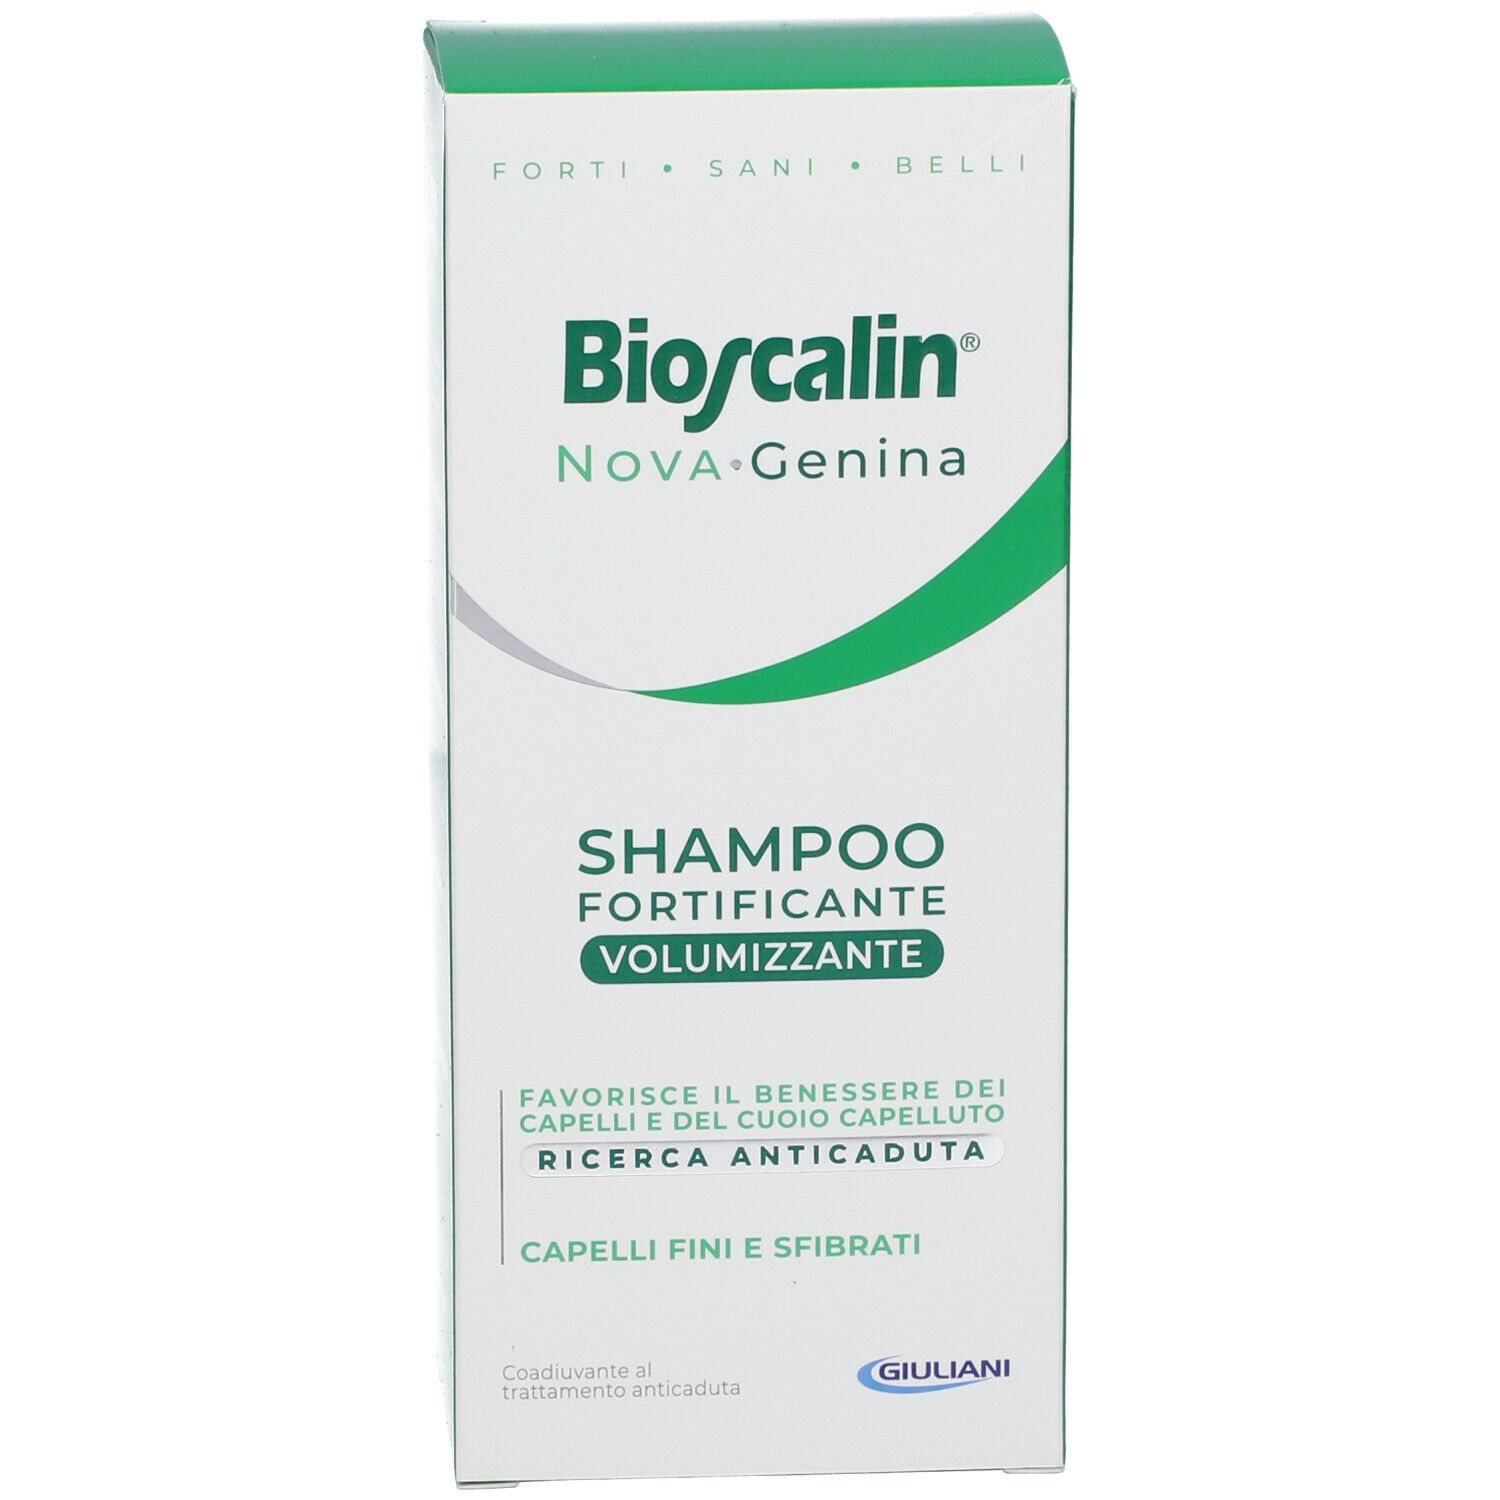 Bioscalin® NOVA Genina Shampoo Fortificante Volumizzante